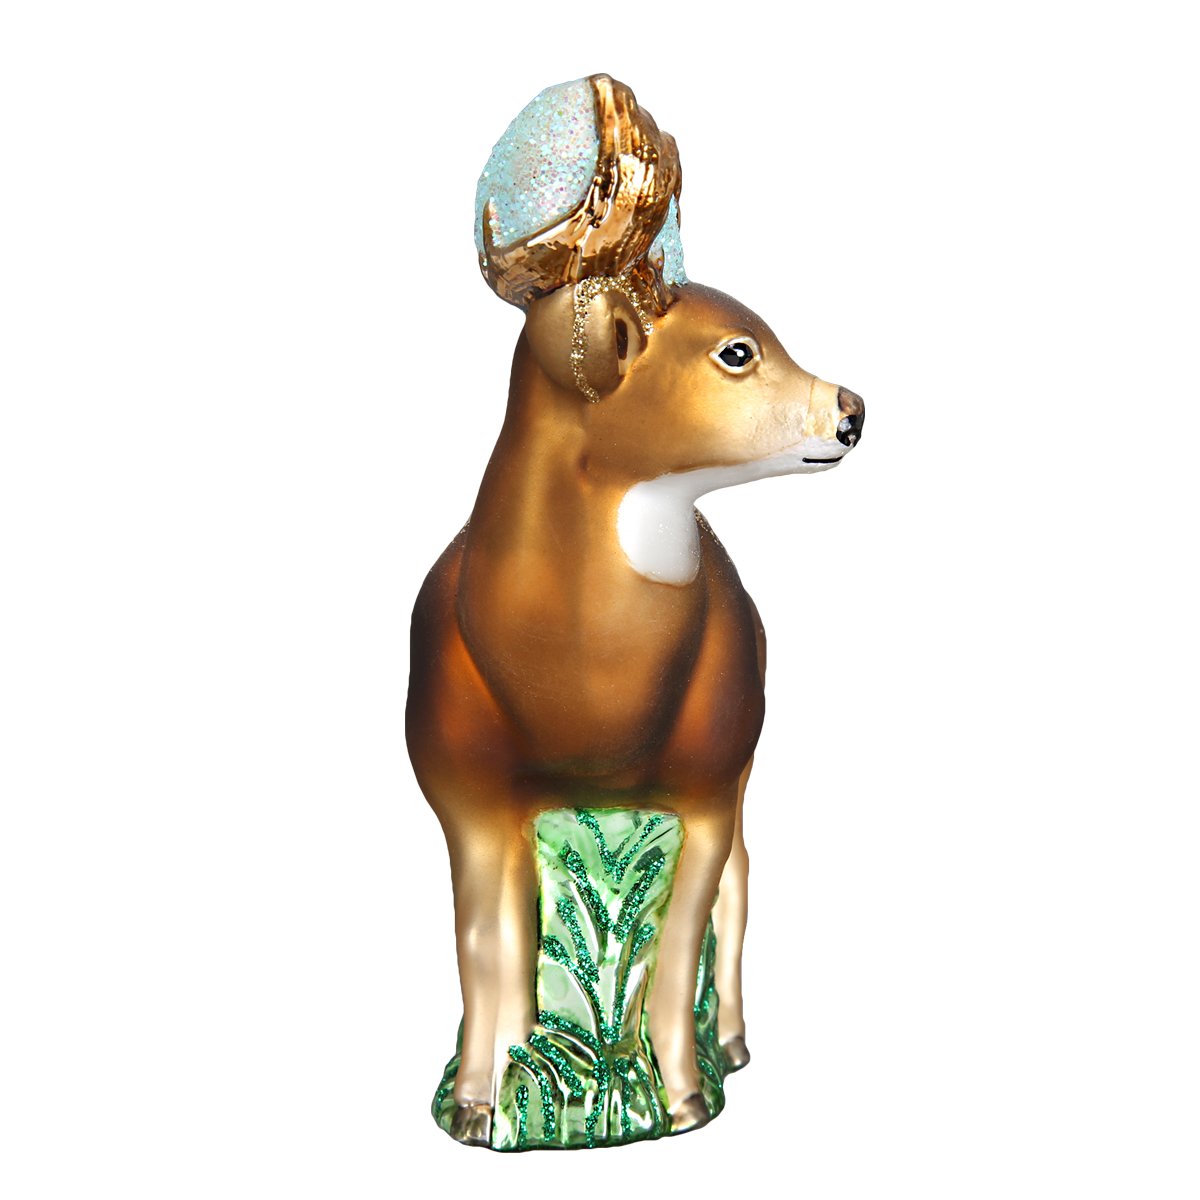 Whitetail Deer Ornament